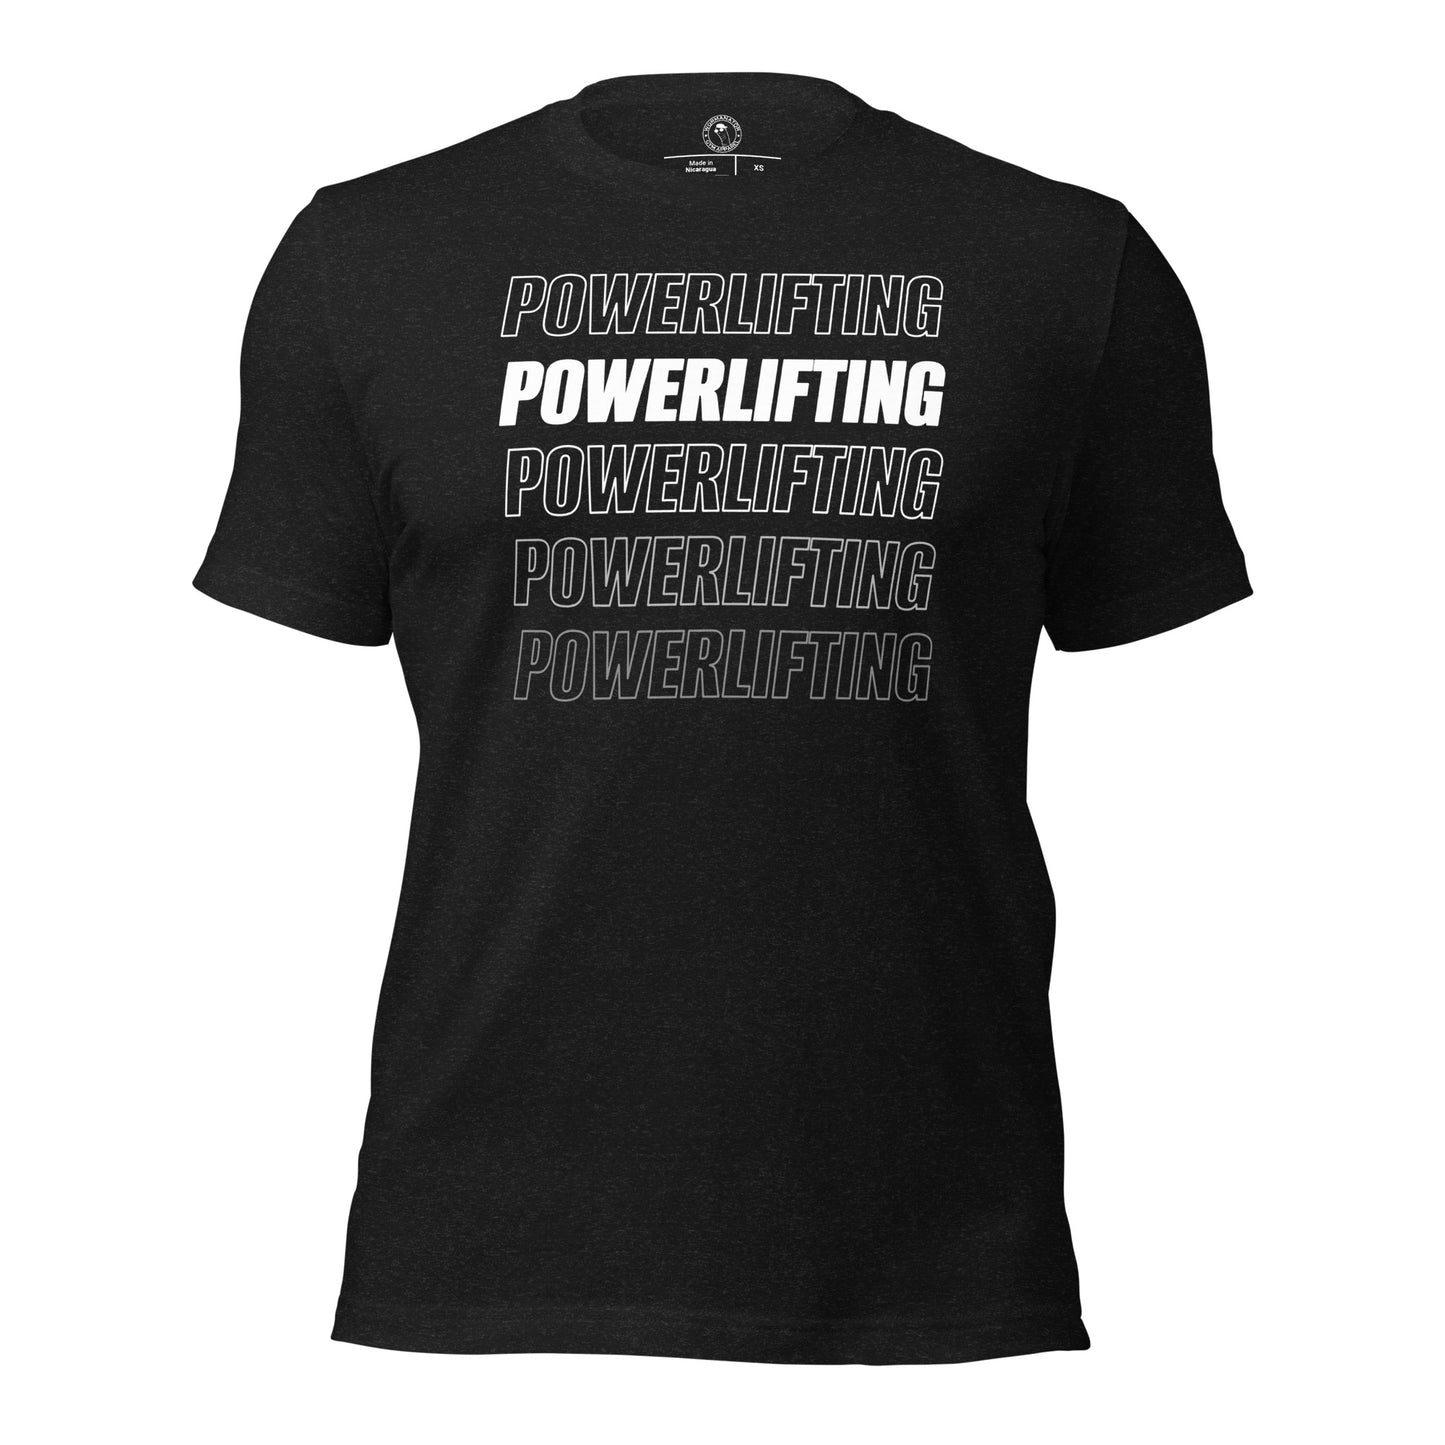 Powerlifting Shirt in Black Heather